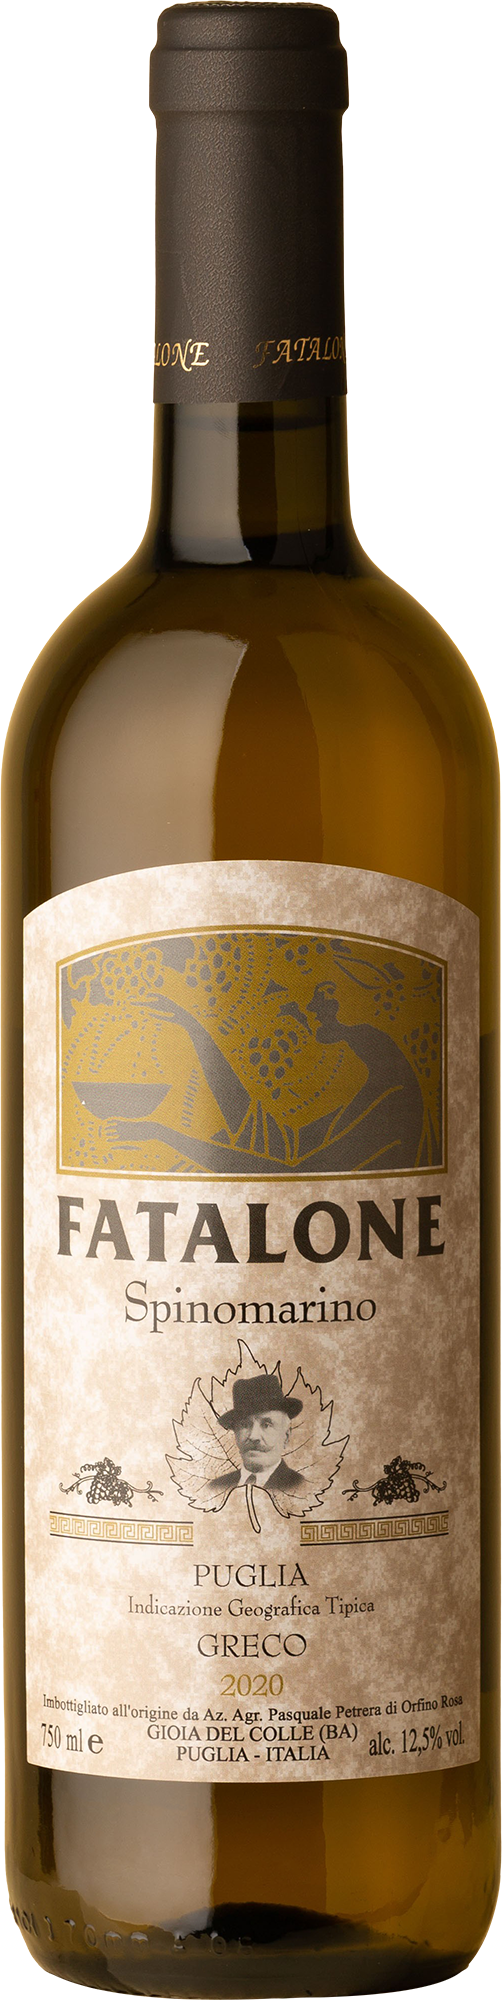 Fatalone - Spinomarino Greco 2020 White Wine